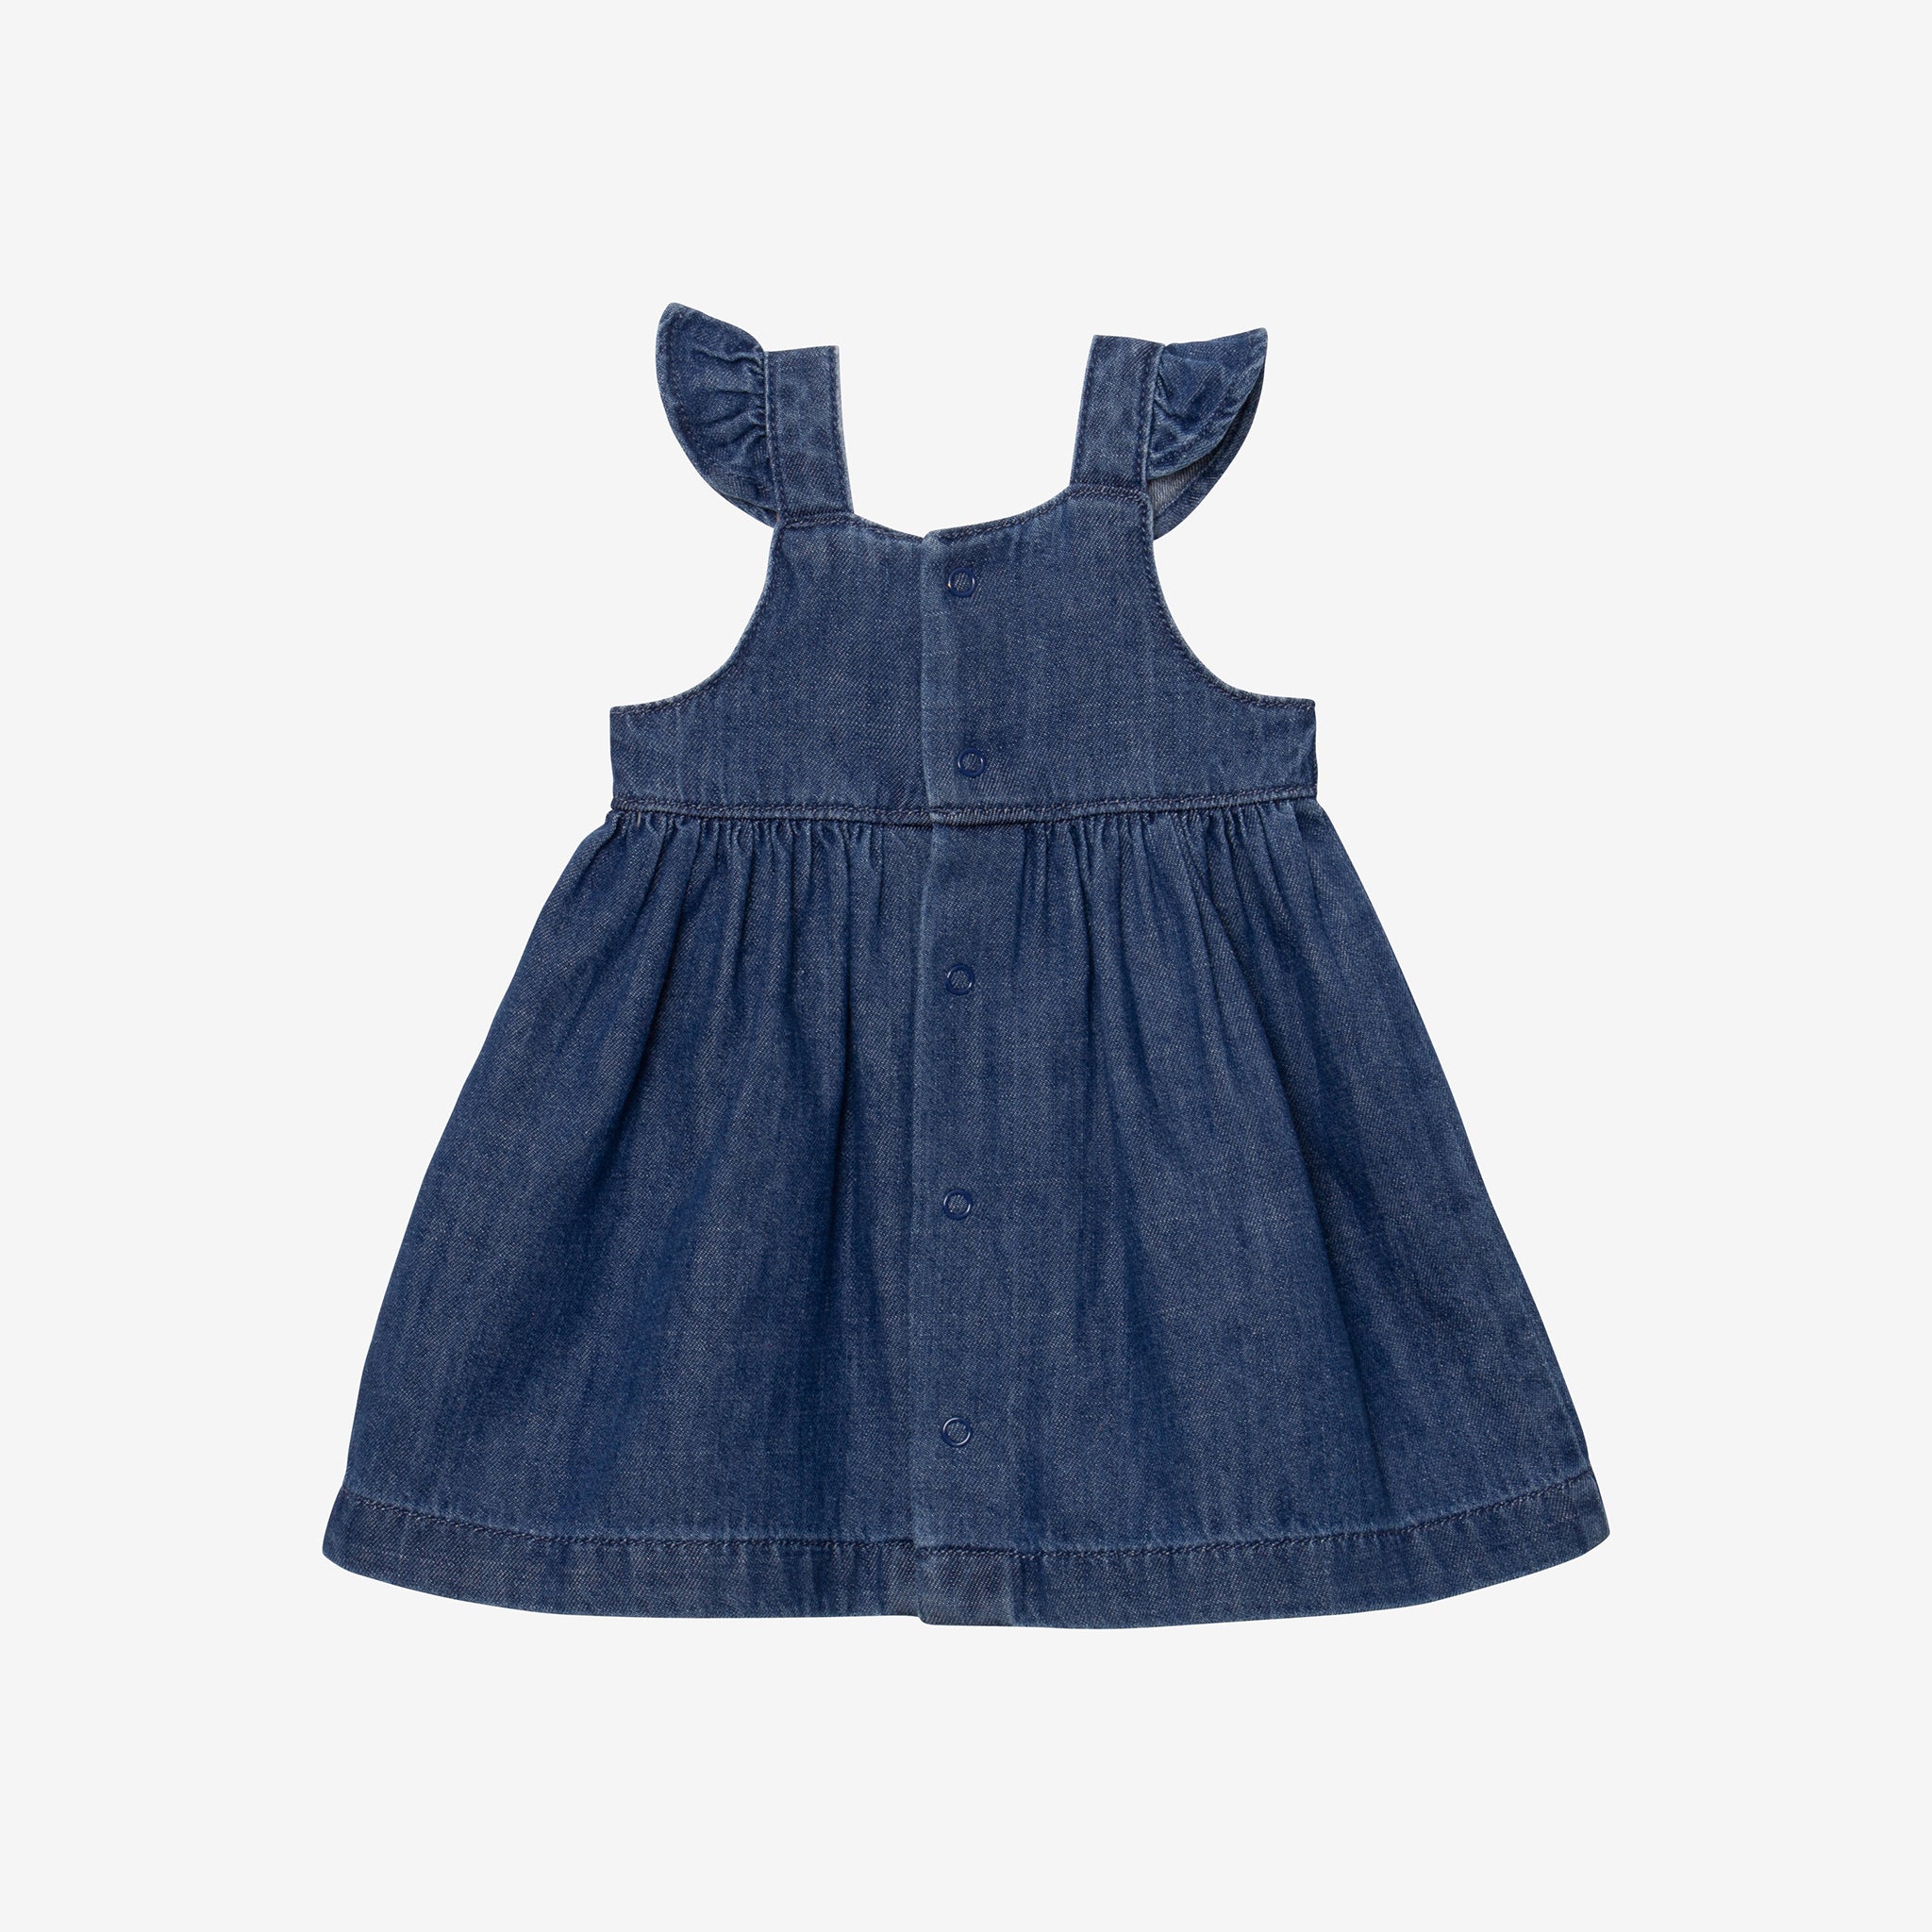 CATIMINI Baby girls' blue embroidered denim dungarees dress